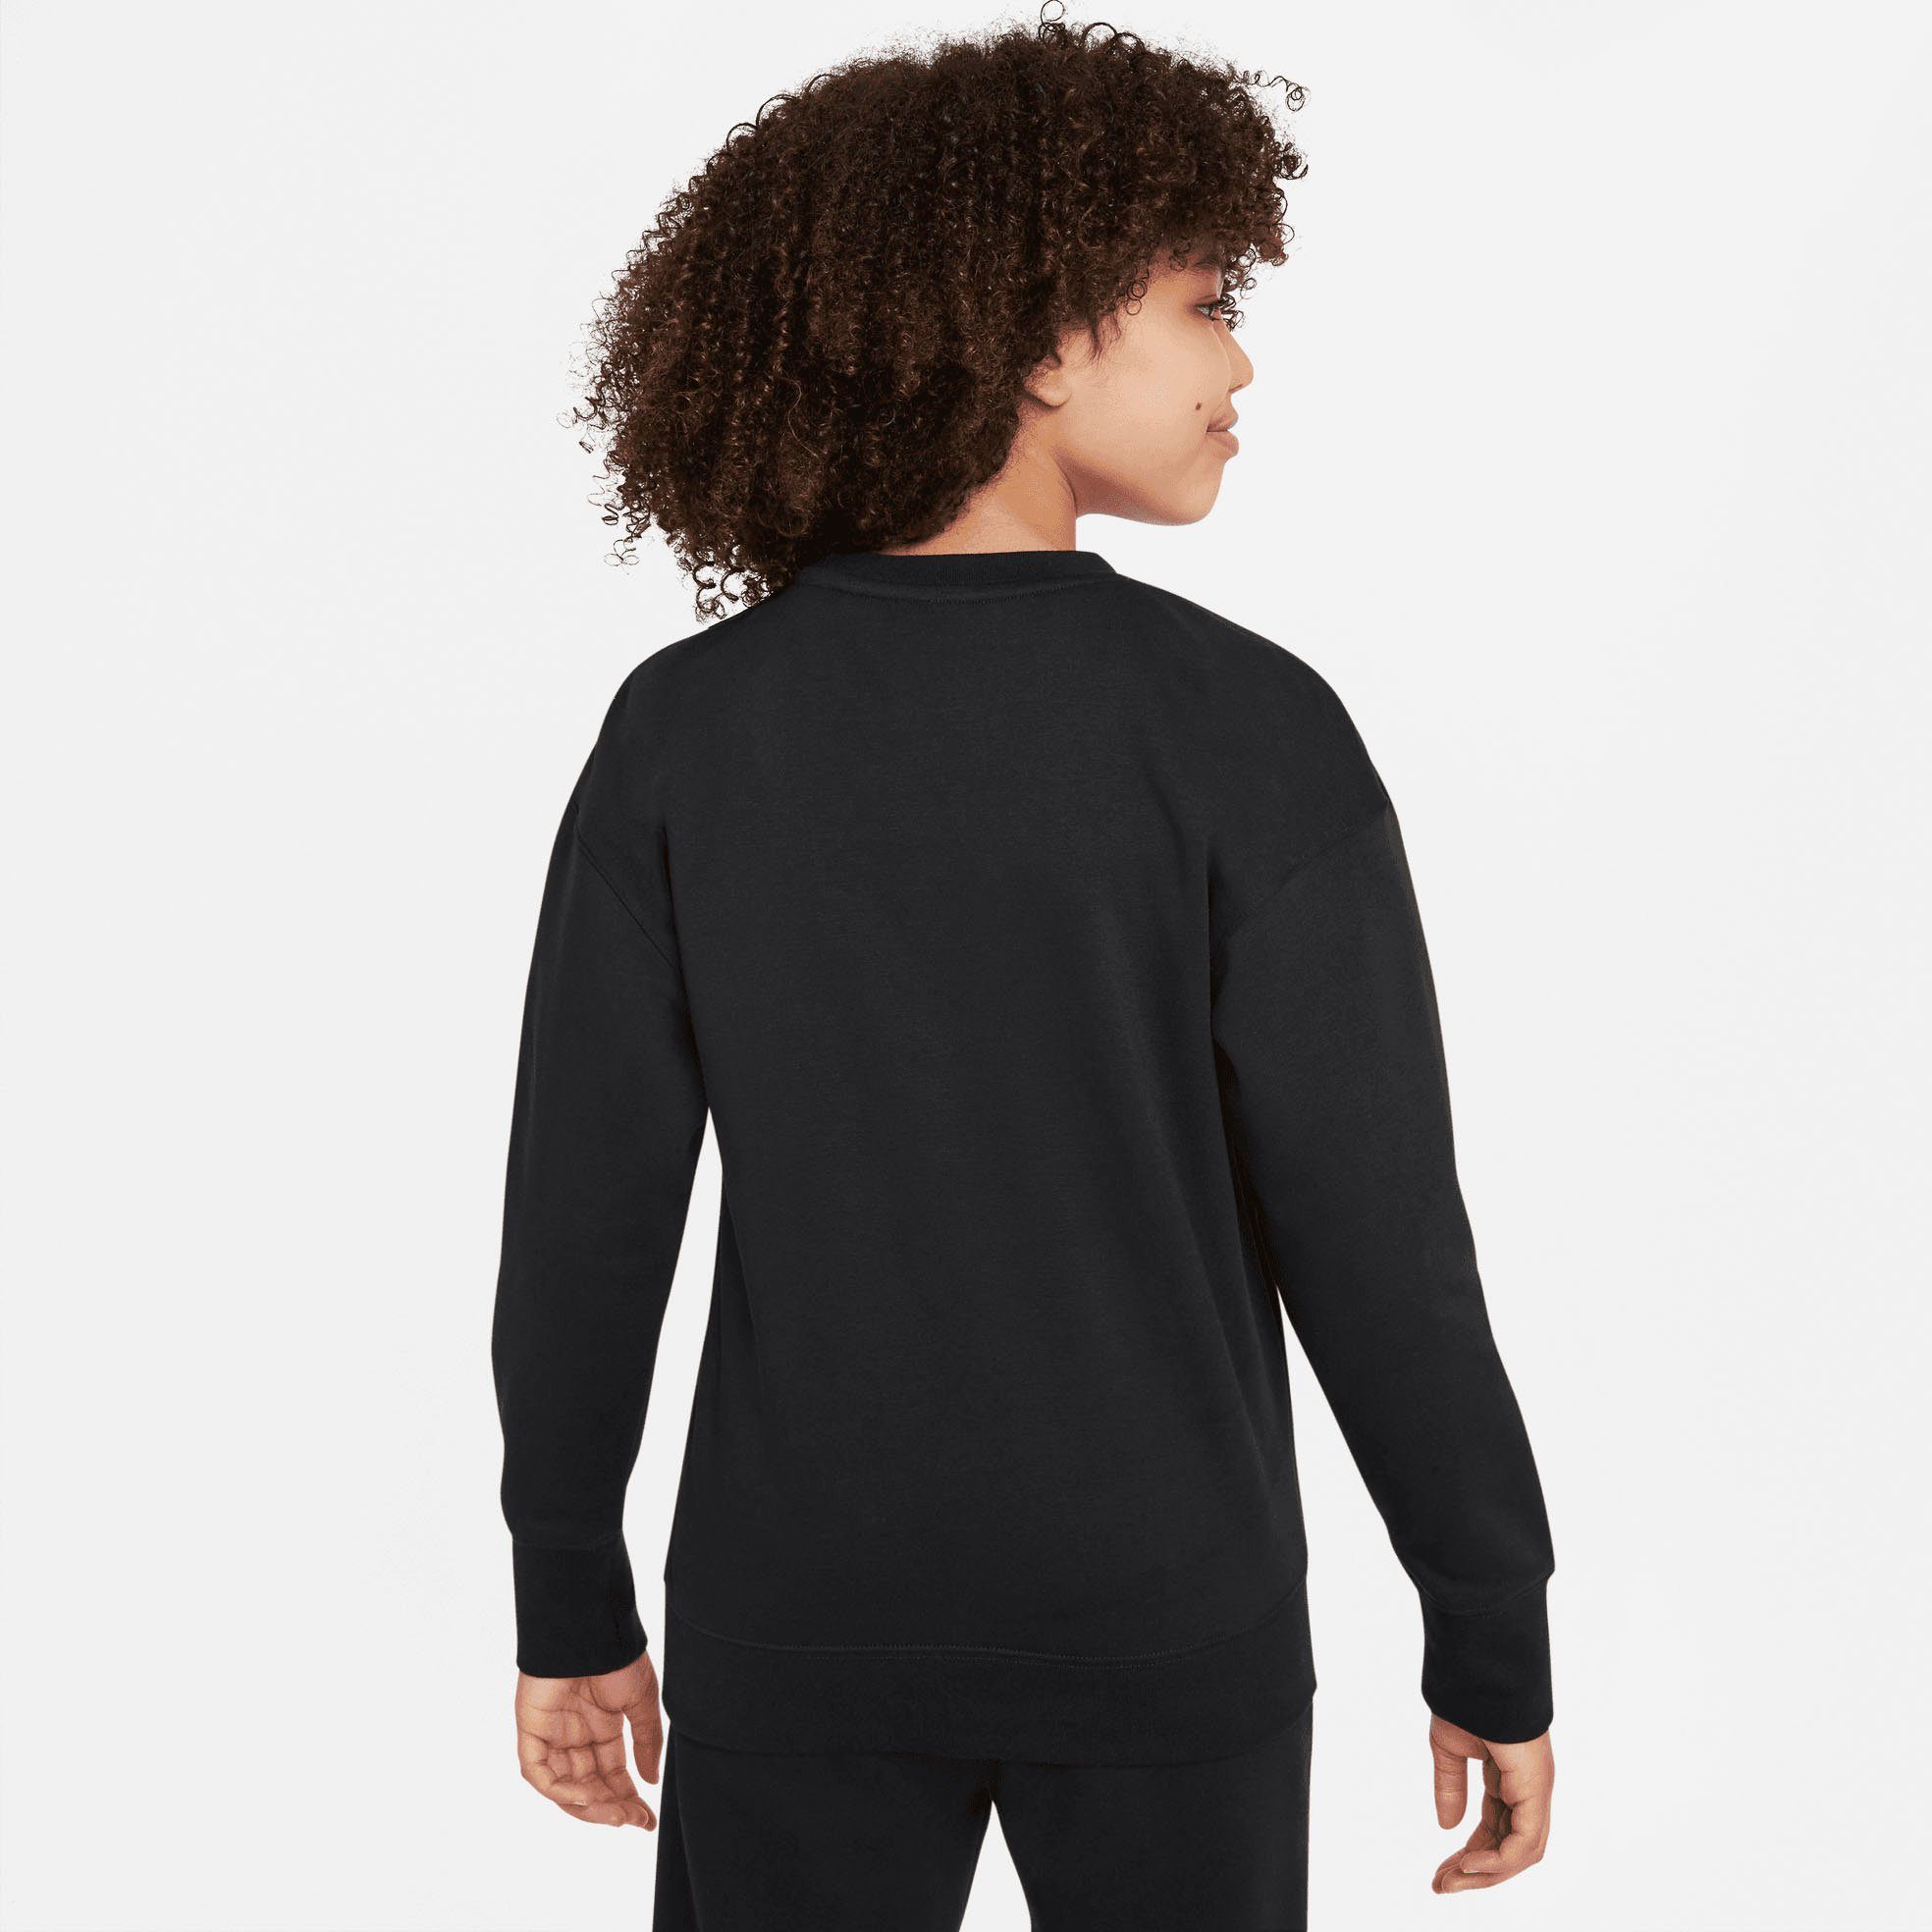 Nike Sportswear Sweatshirt Club schwarz Kids' Crew Big Sweatshirt (Girls) Fleece